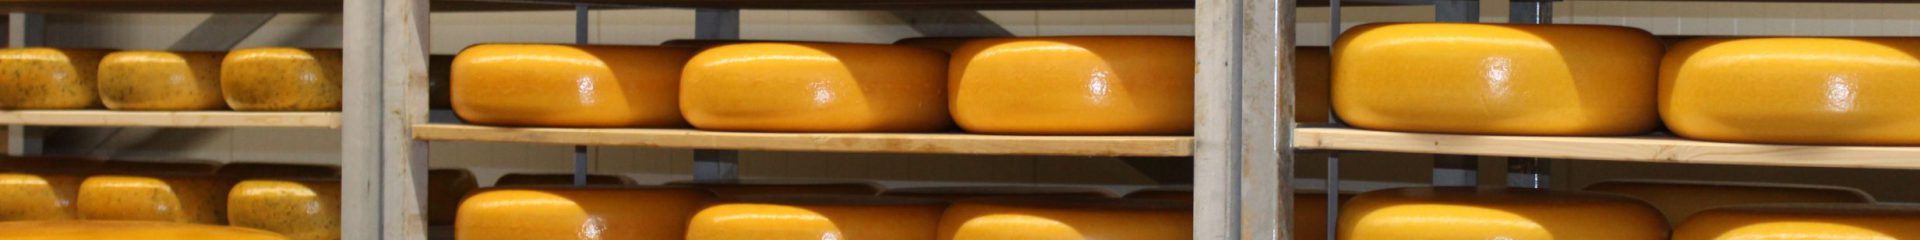 New: Lavanda cheese